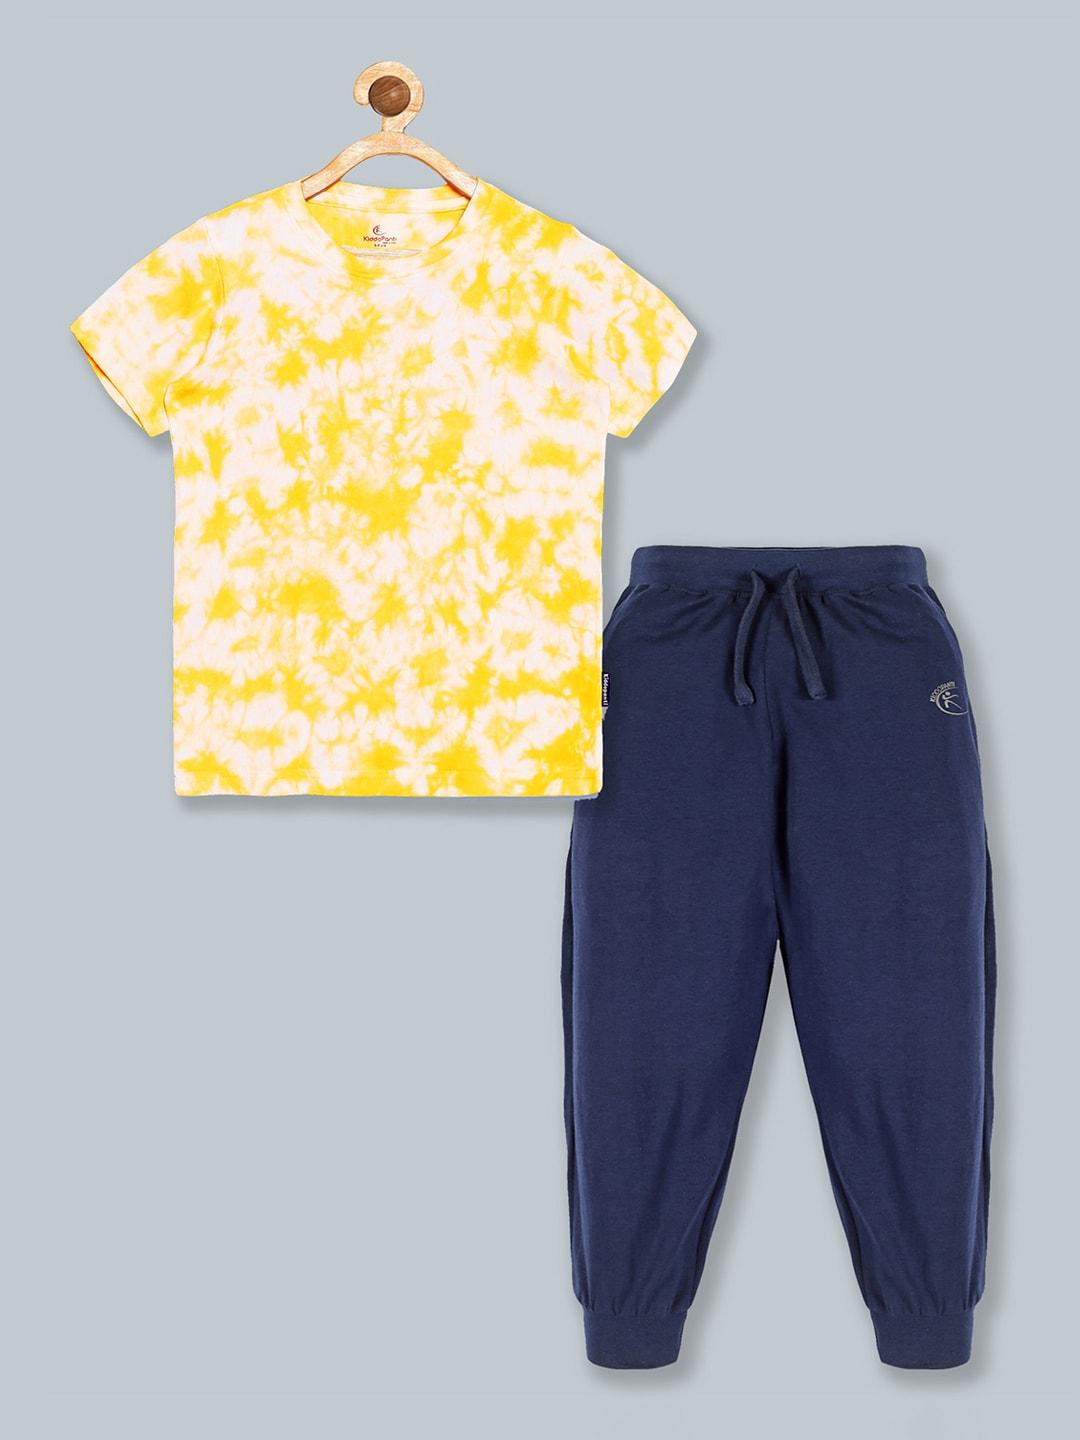 KiddoPanti Boys Yellow & Blue Dyed Cotton T-shirt with Track Pant